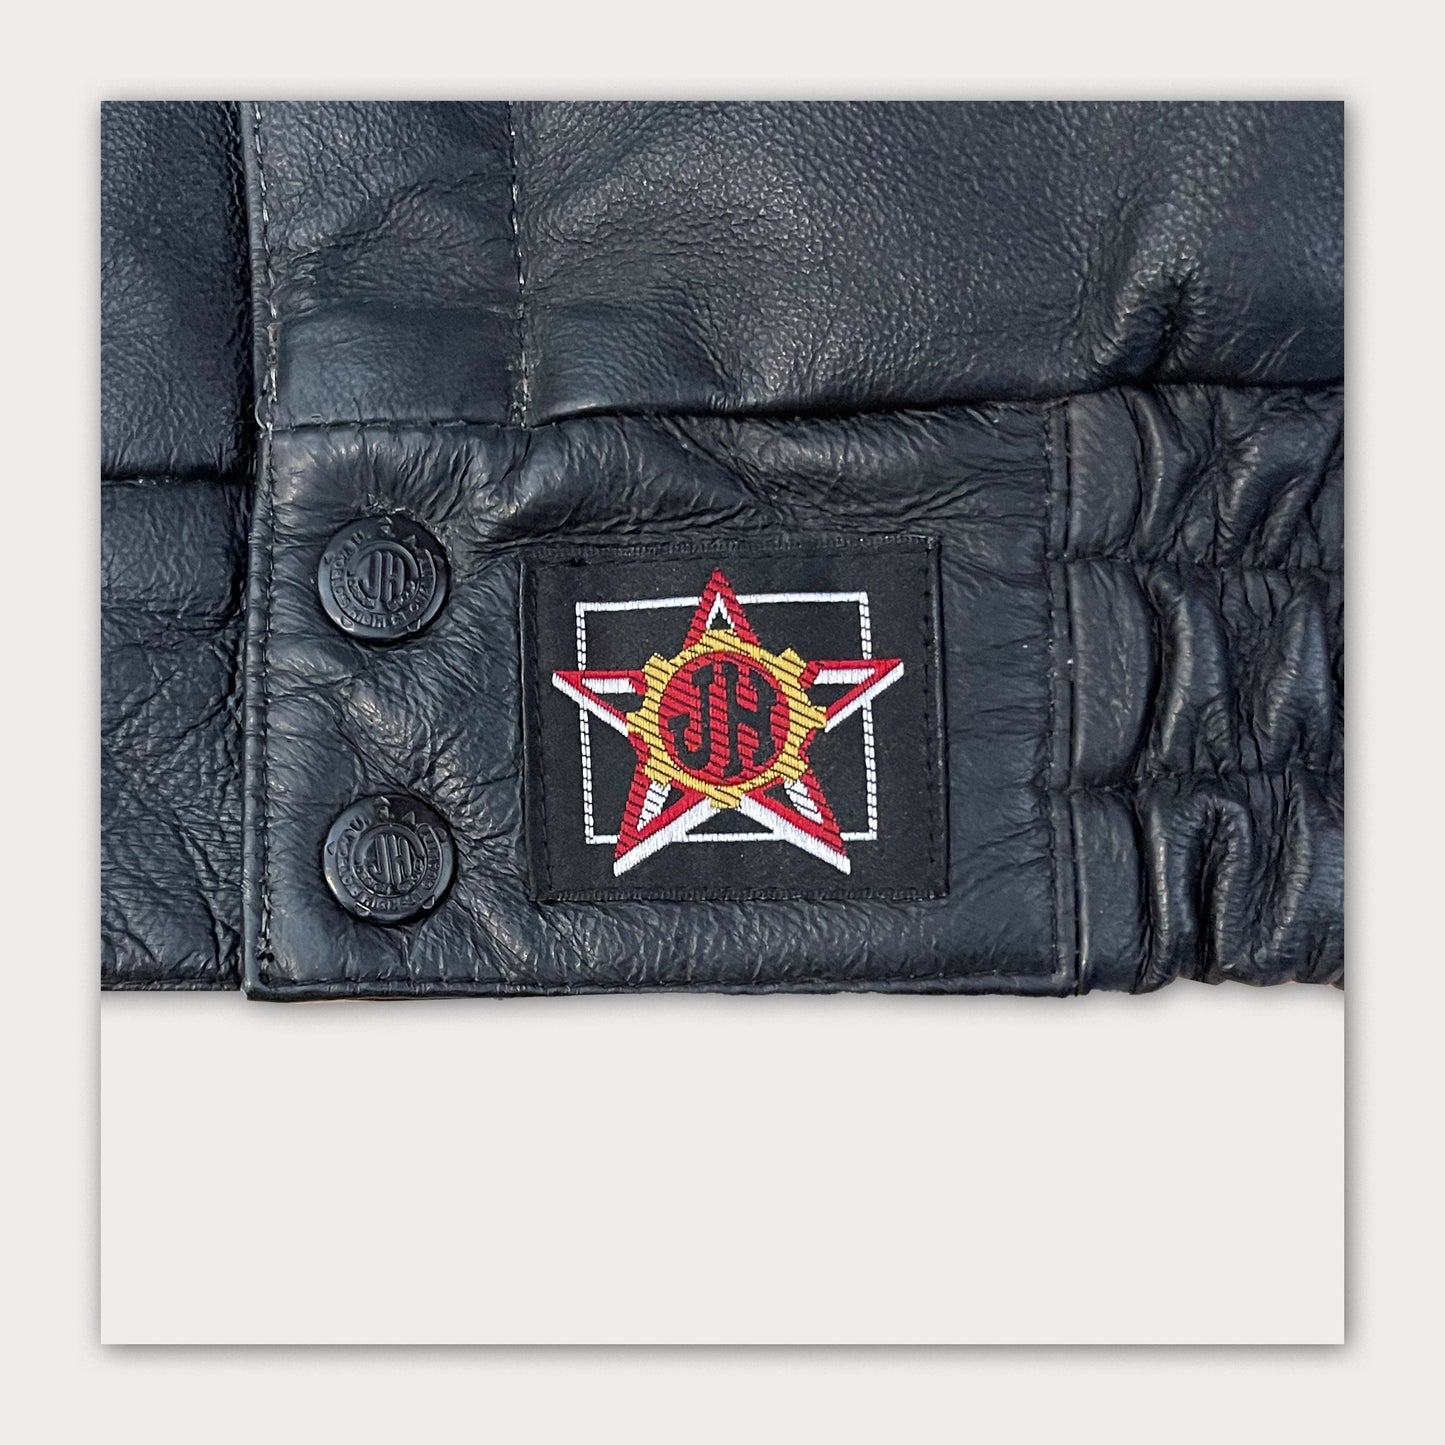 90s Jeff Gordon Leather Jacket